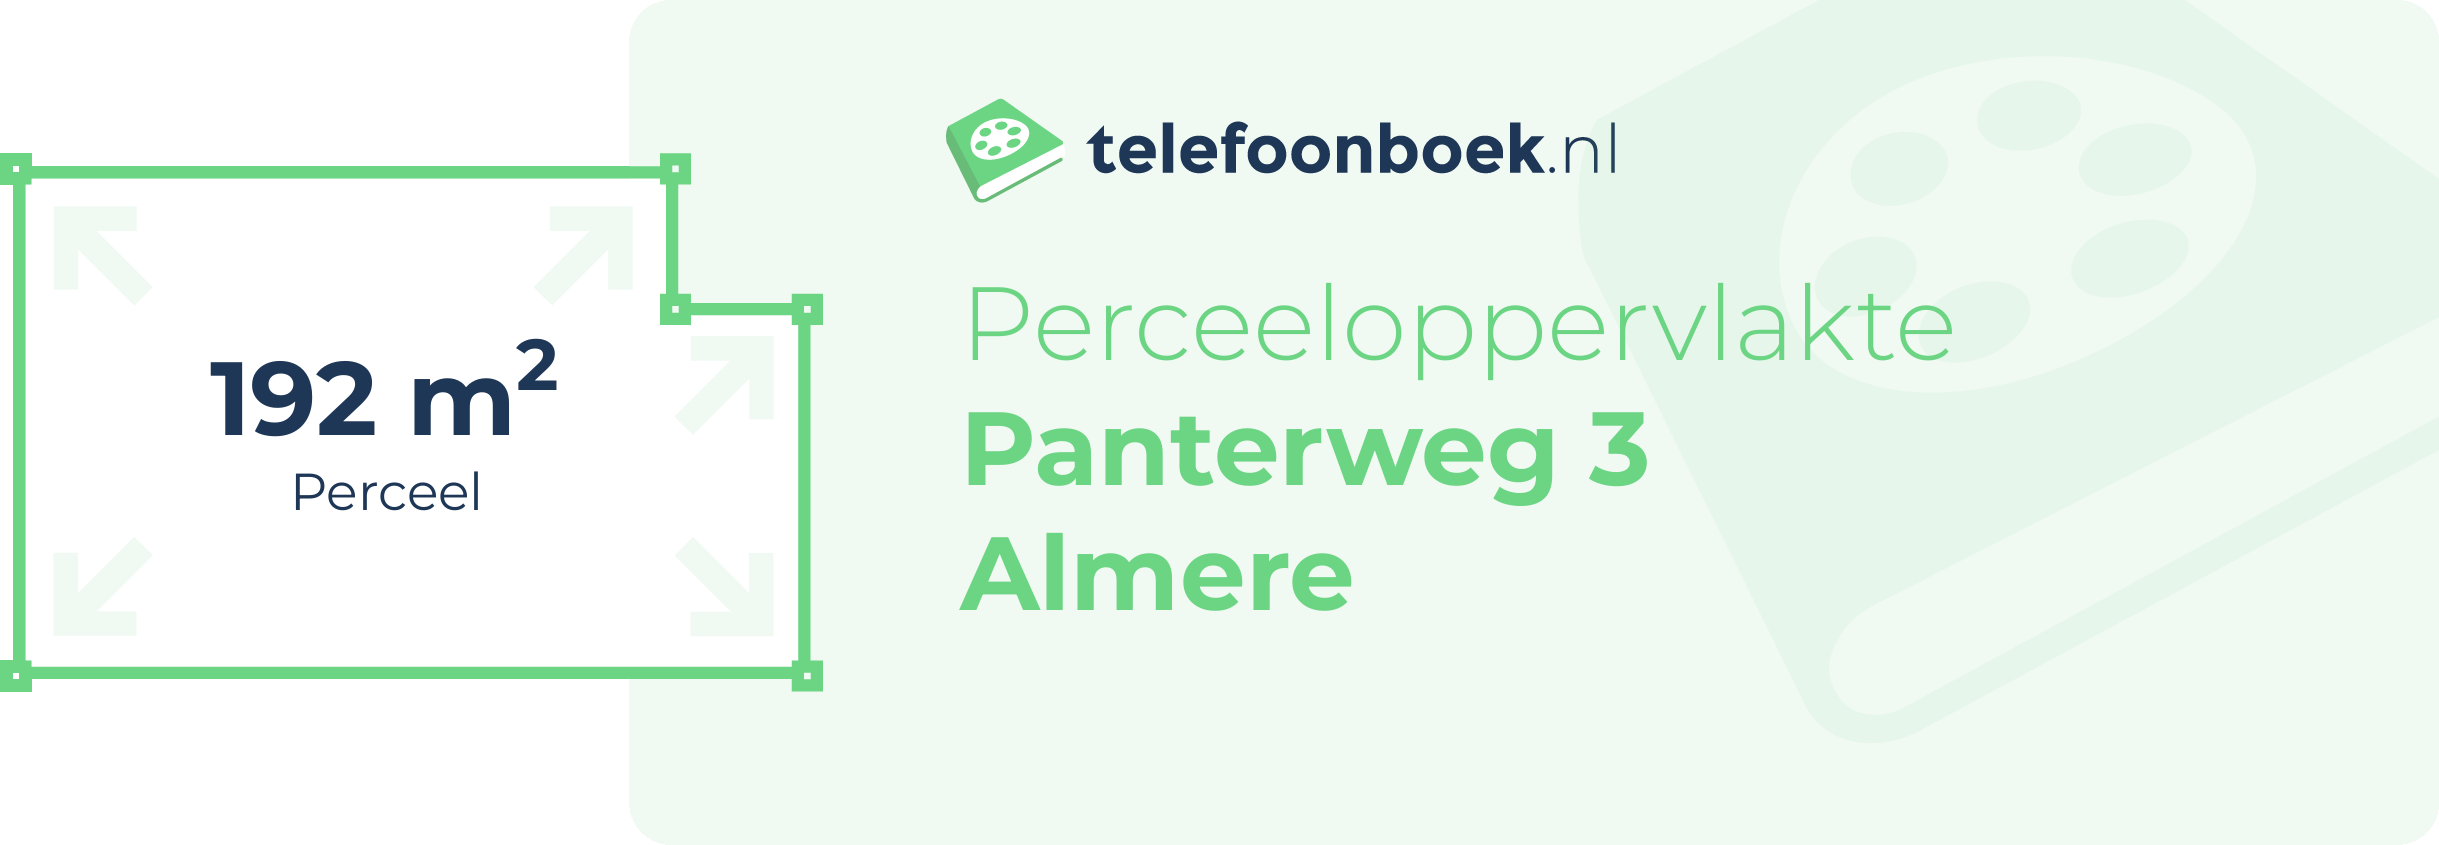 Perceeloppervlakte Panterweg 3 Almere